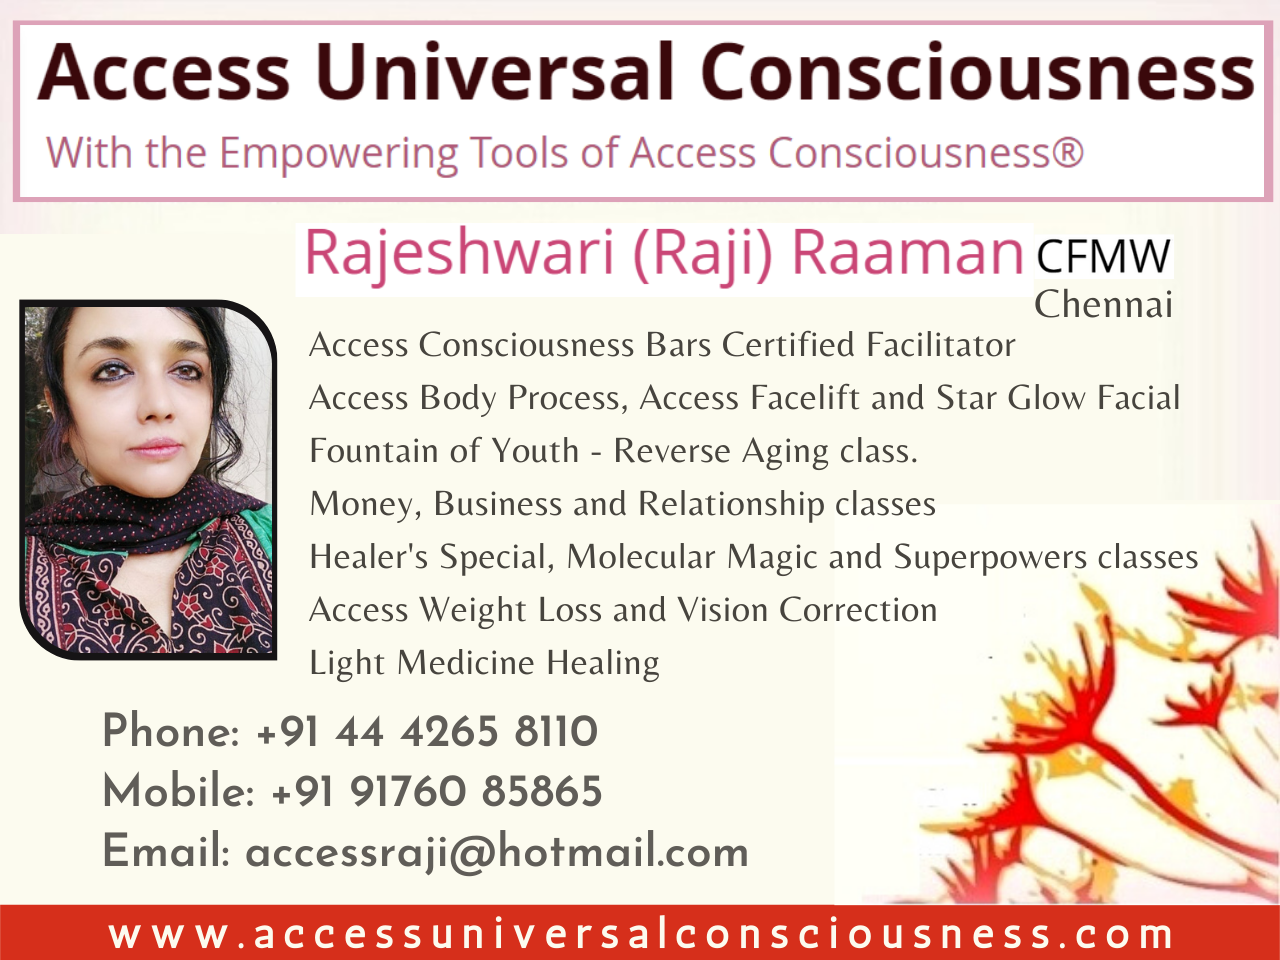 Raji Raaman, Access Consciousness bars and body process Facilitator - Kochi